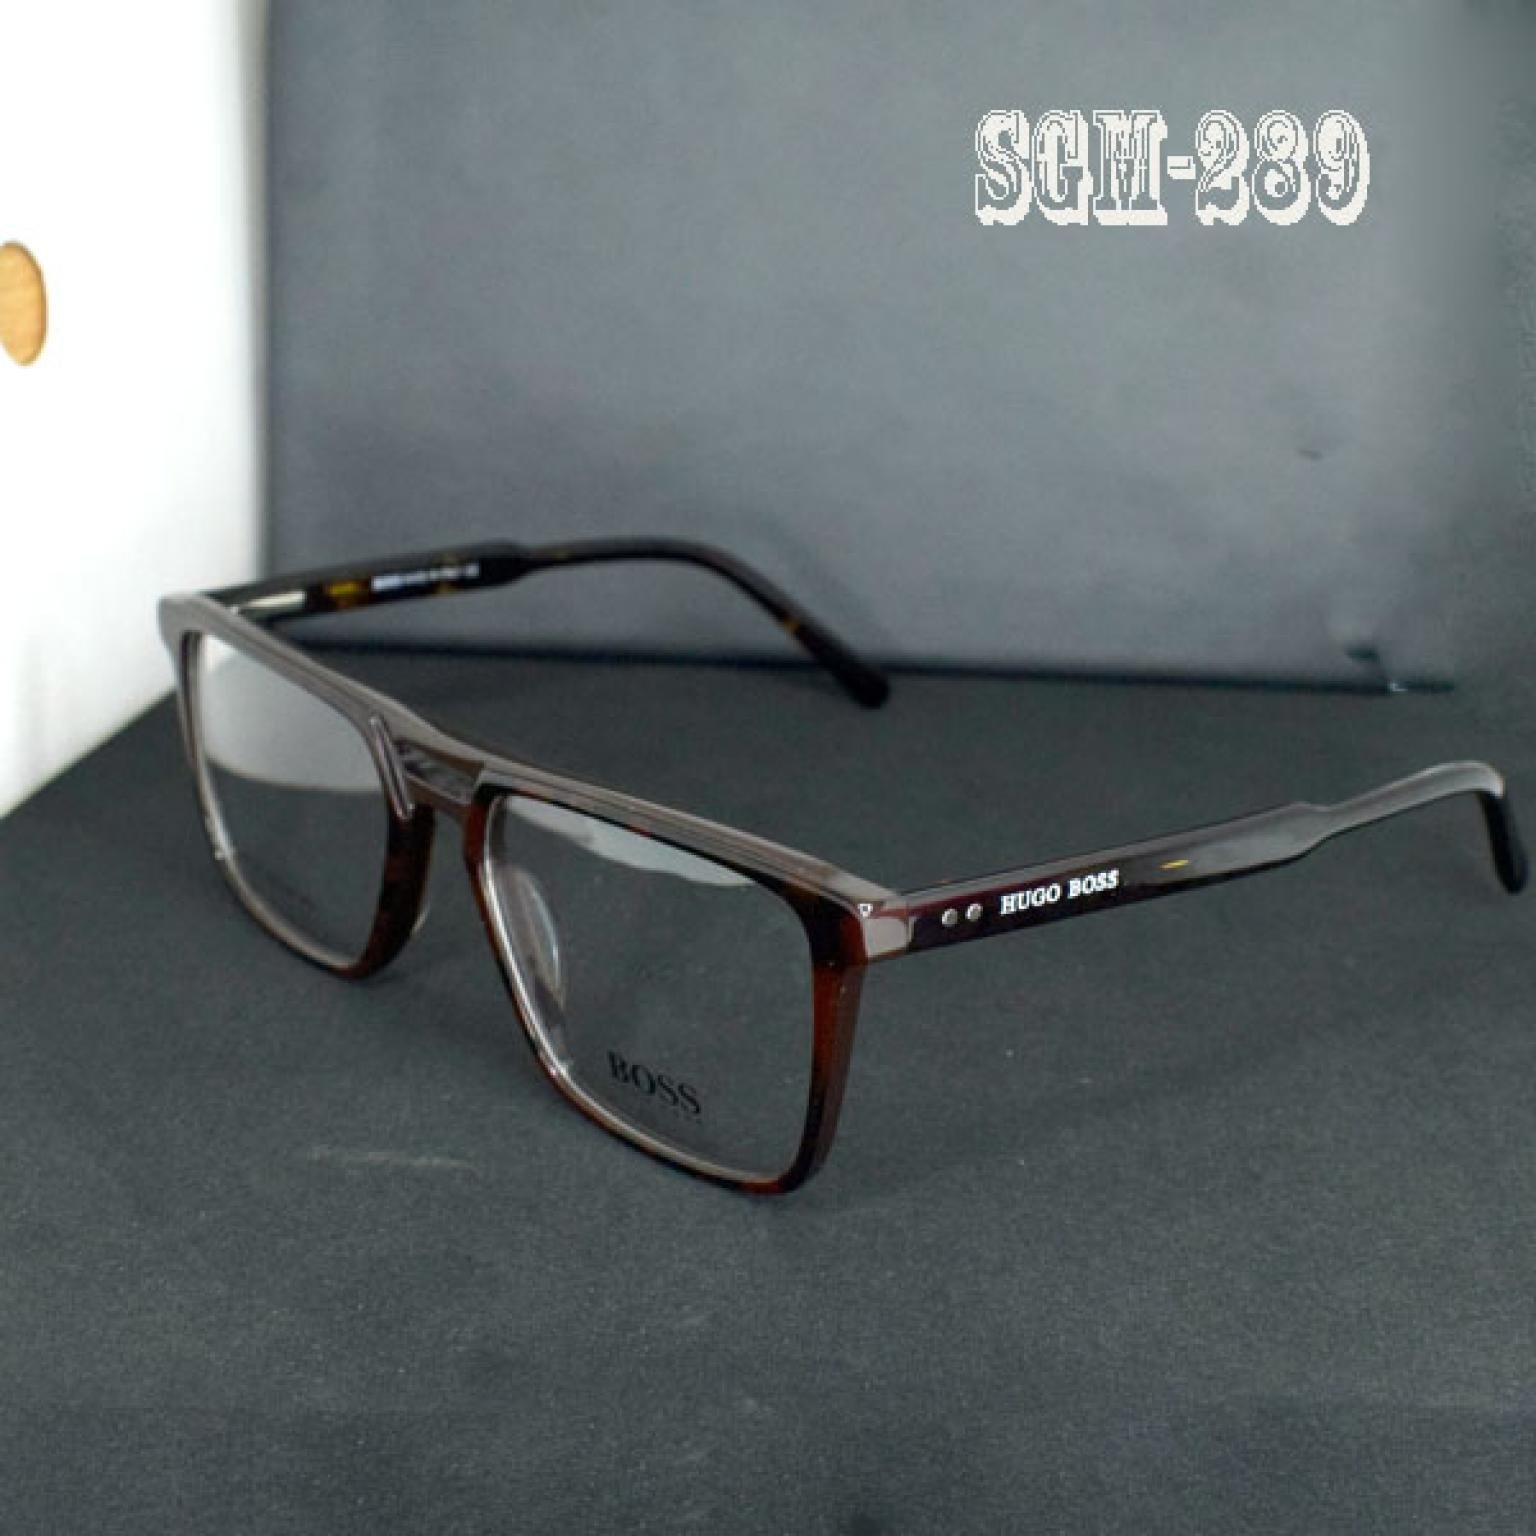 Classic Design Acetate Frame Optical Glasses For Men